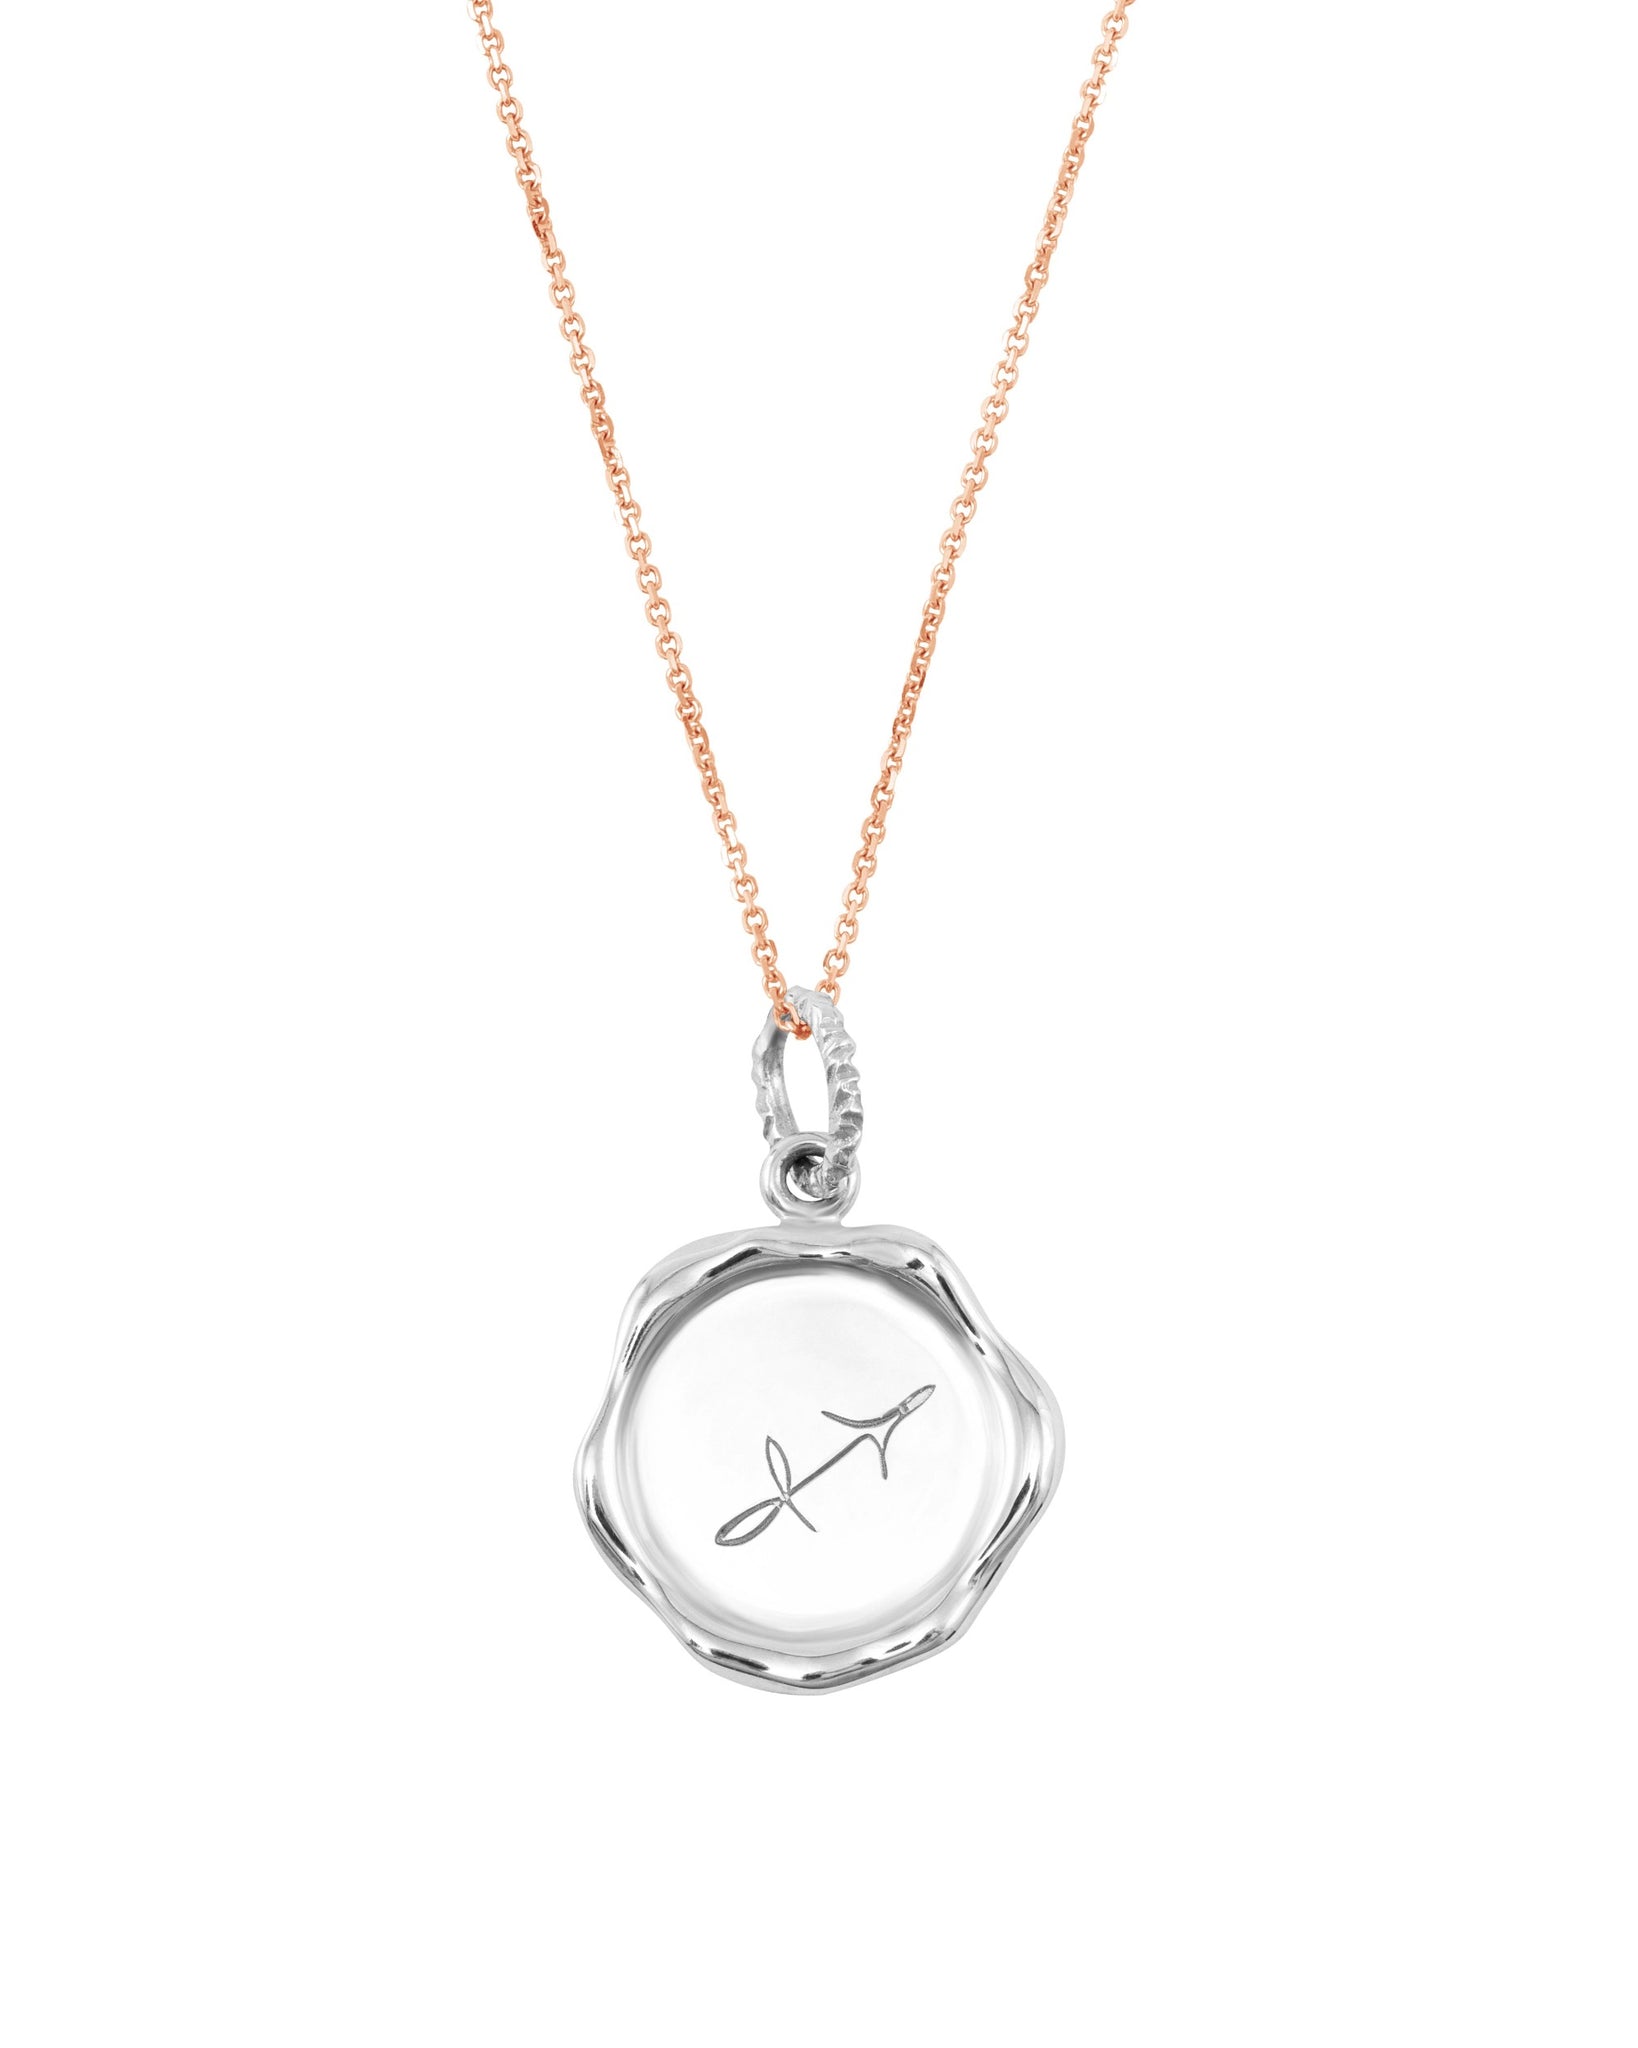 Zodiac Sagittarius necklace